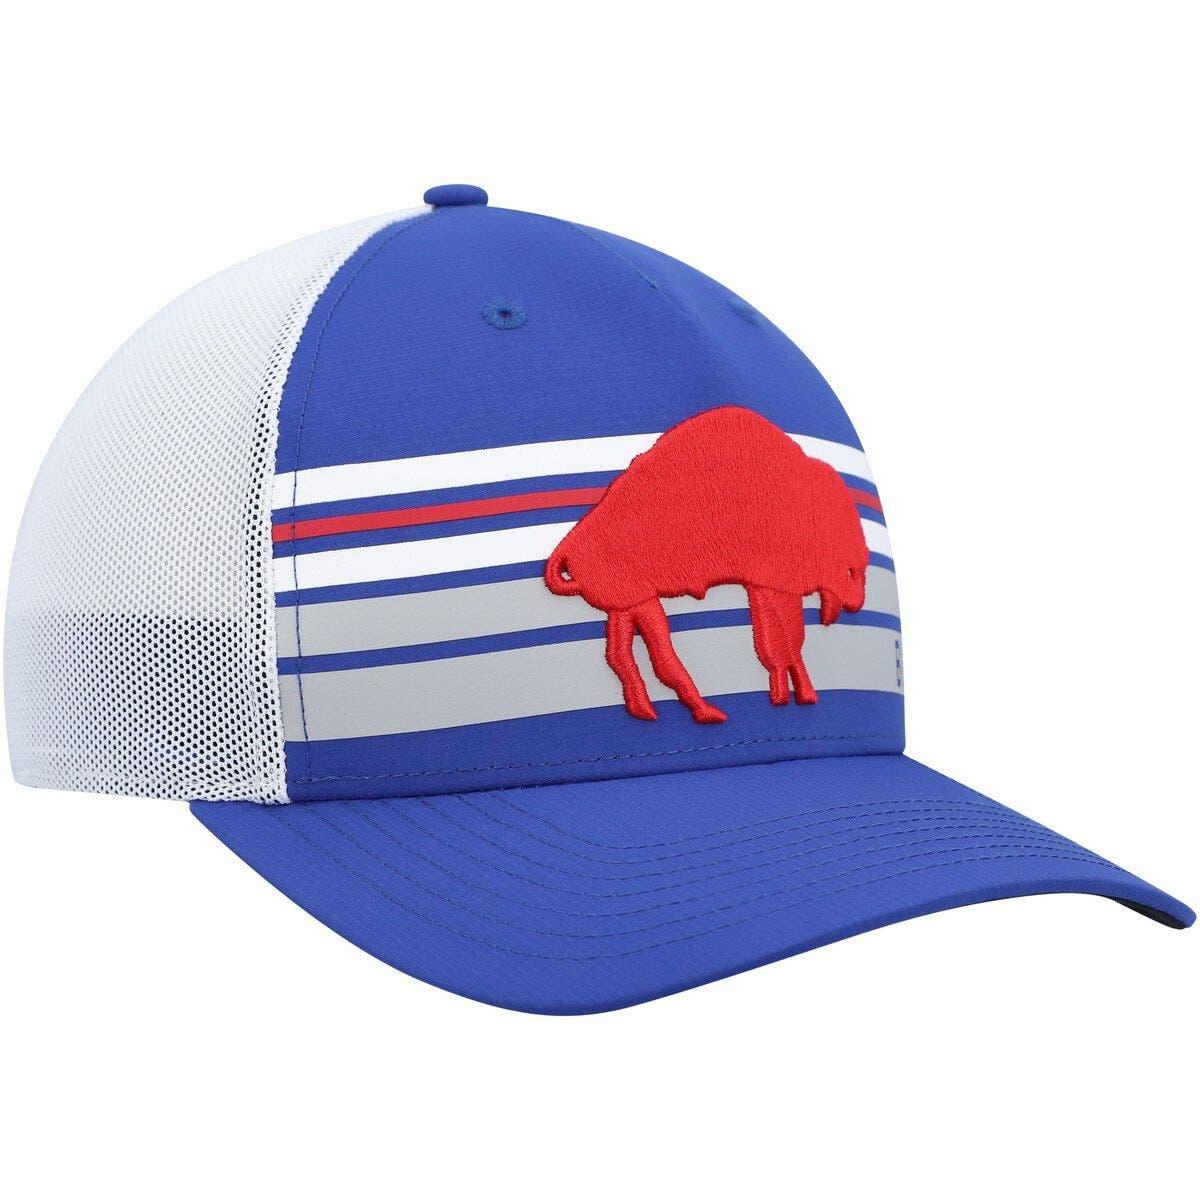 Nhl Buffalo Sabres Clean Up Hat : Target